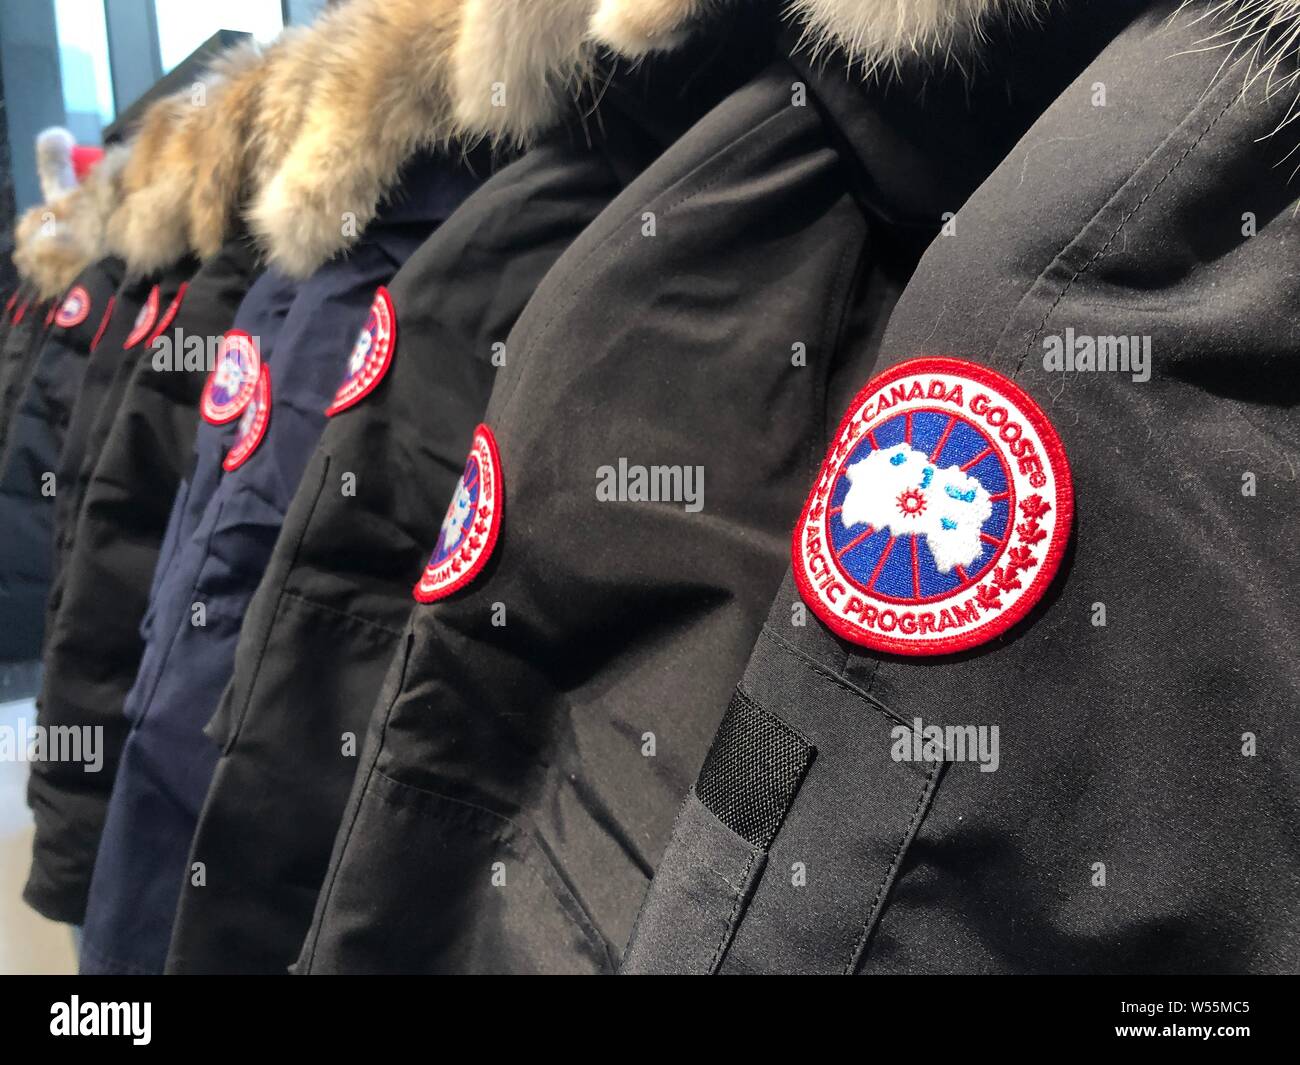 Canada goose jacket -Fotos und -Bildmaterial in hoher Auflösung – Alamy